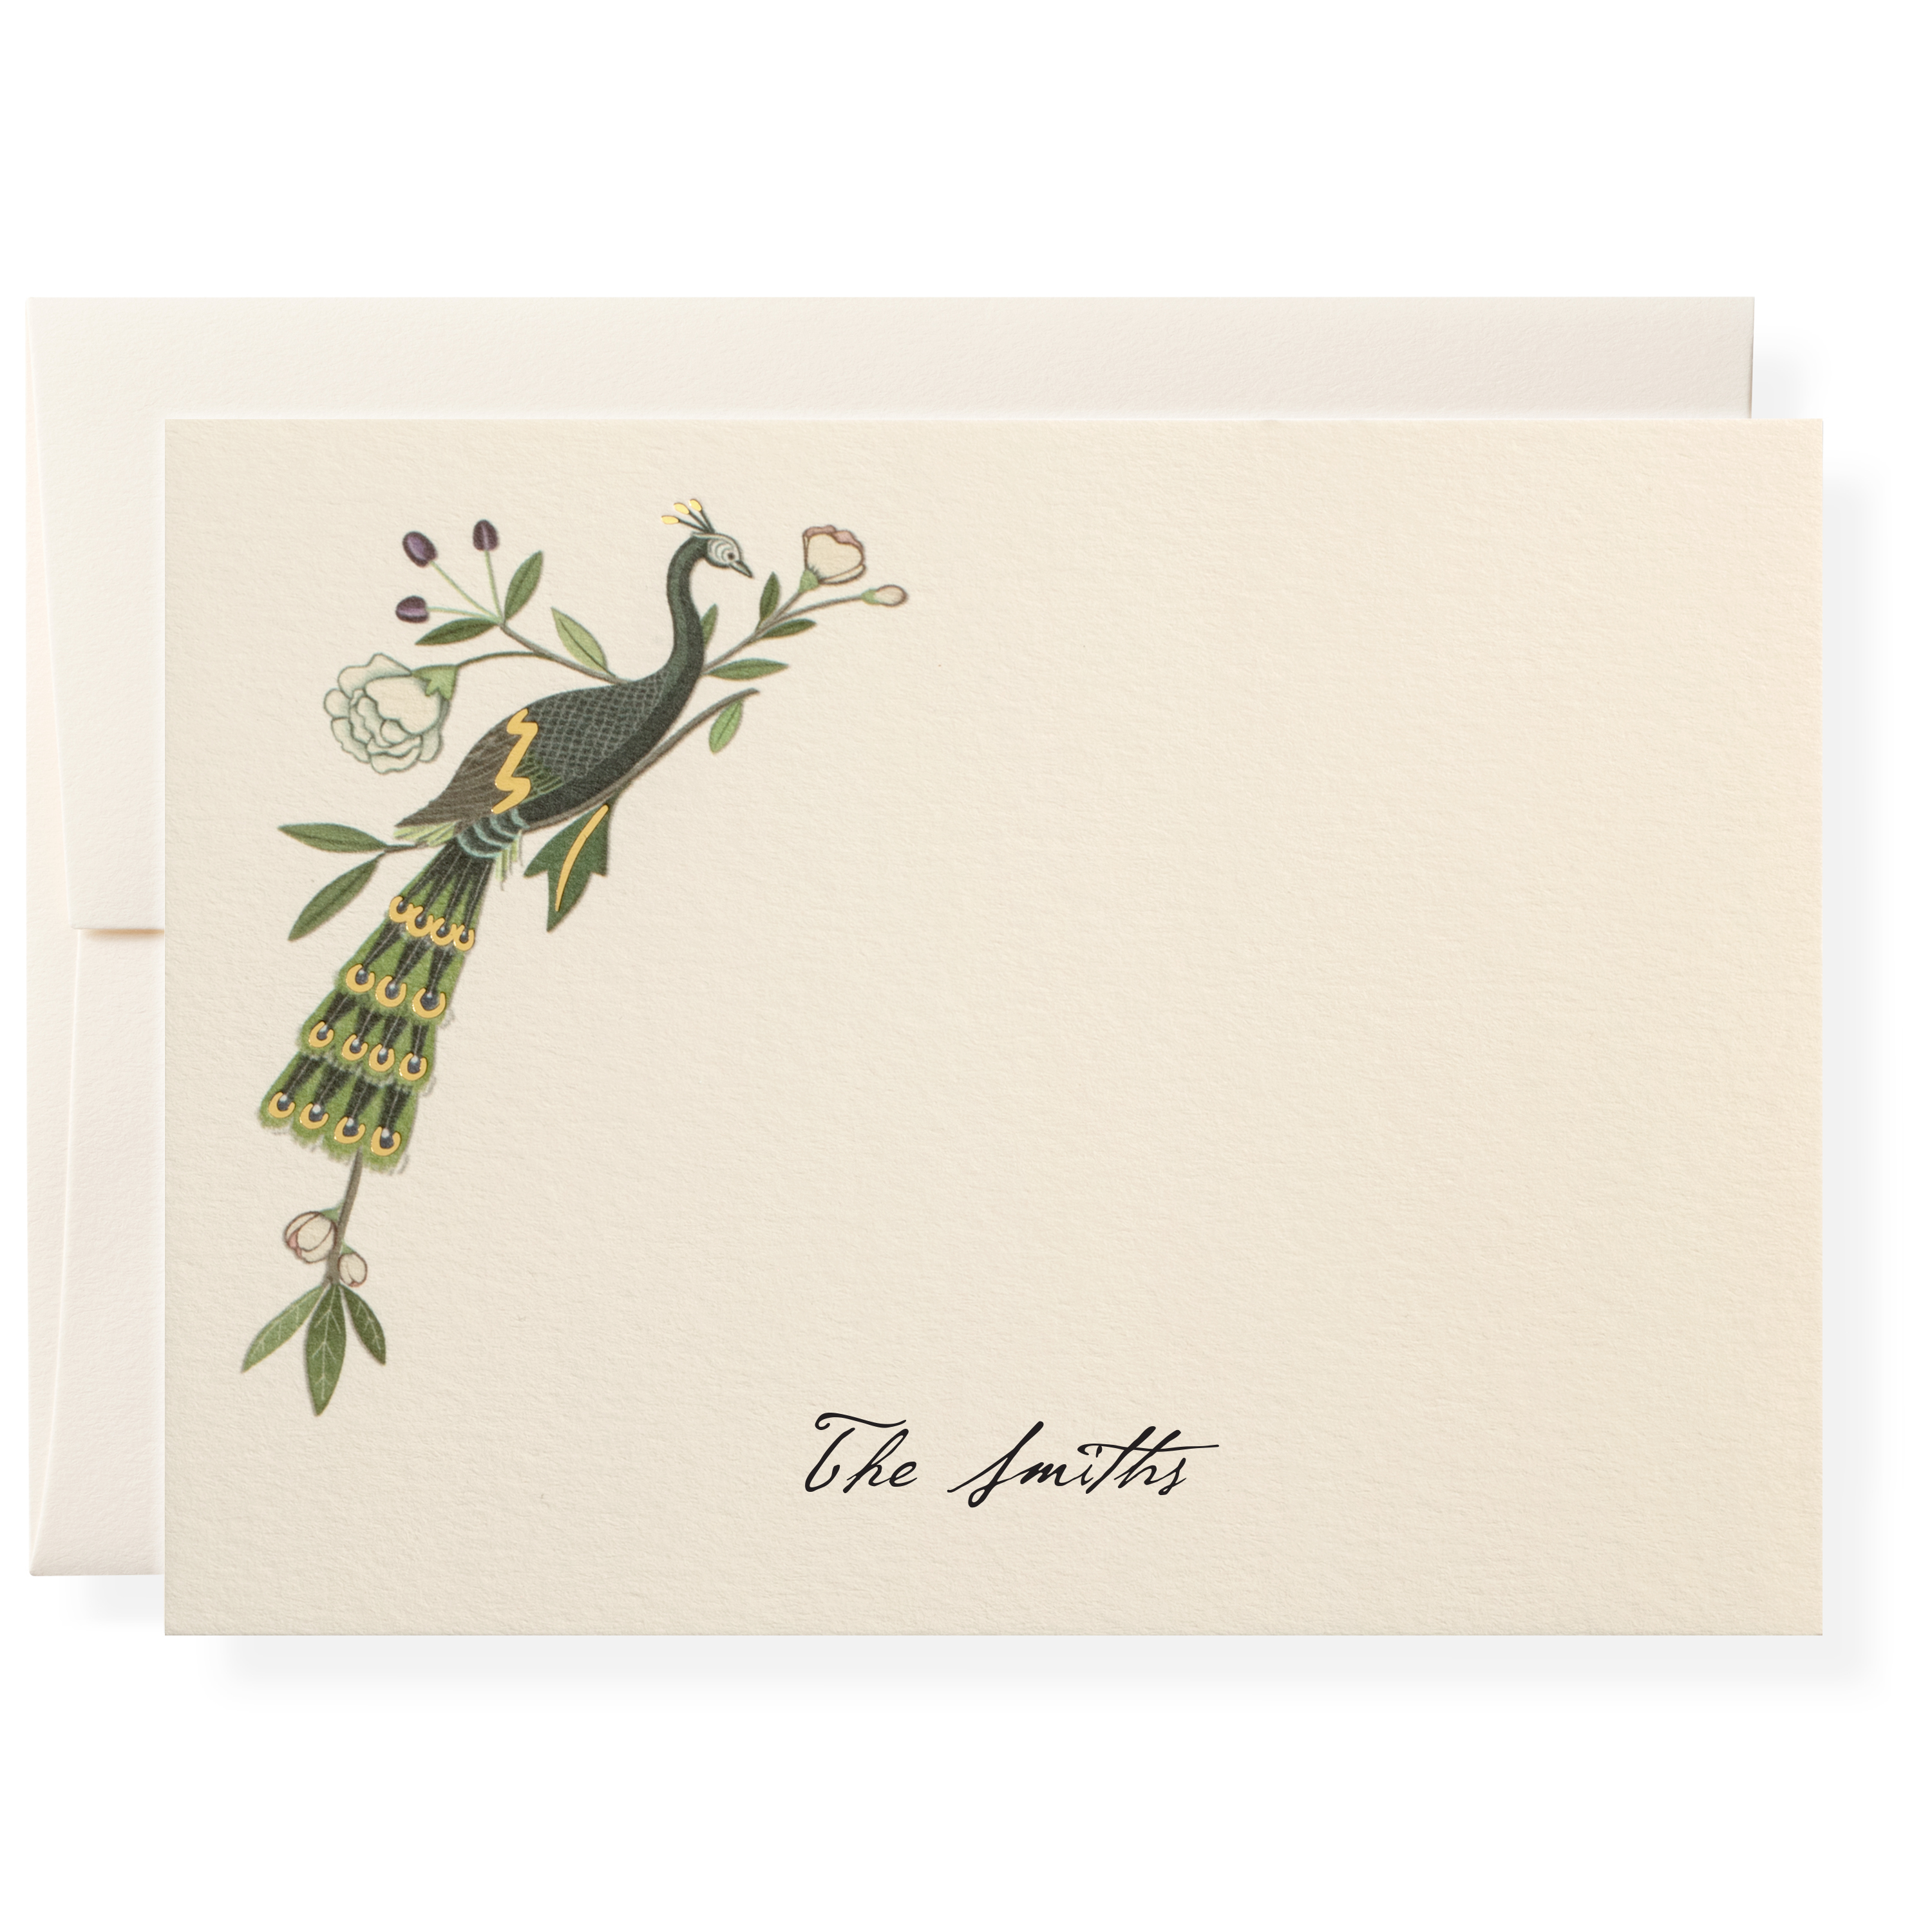 Edith Personalized Note Cards – Karen Adams Designs